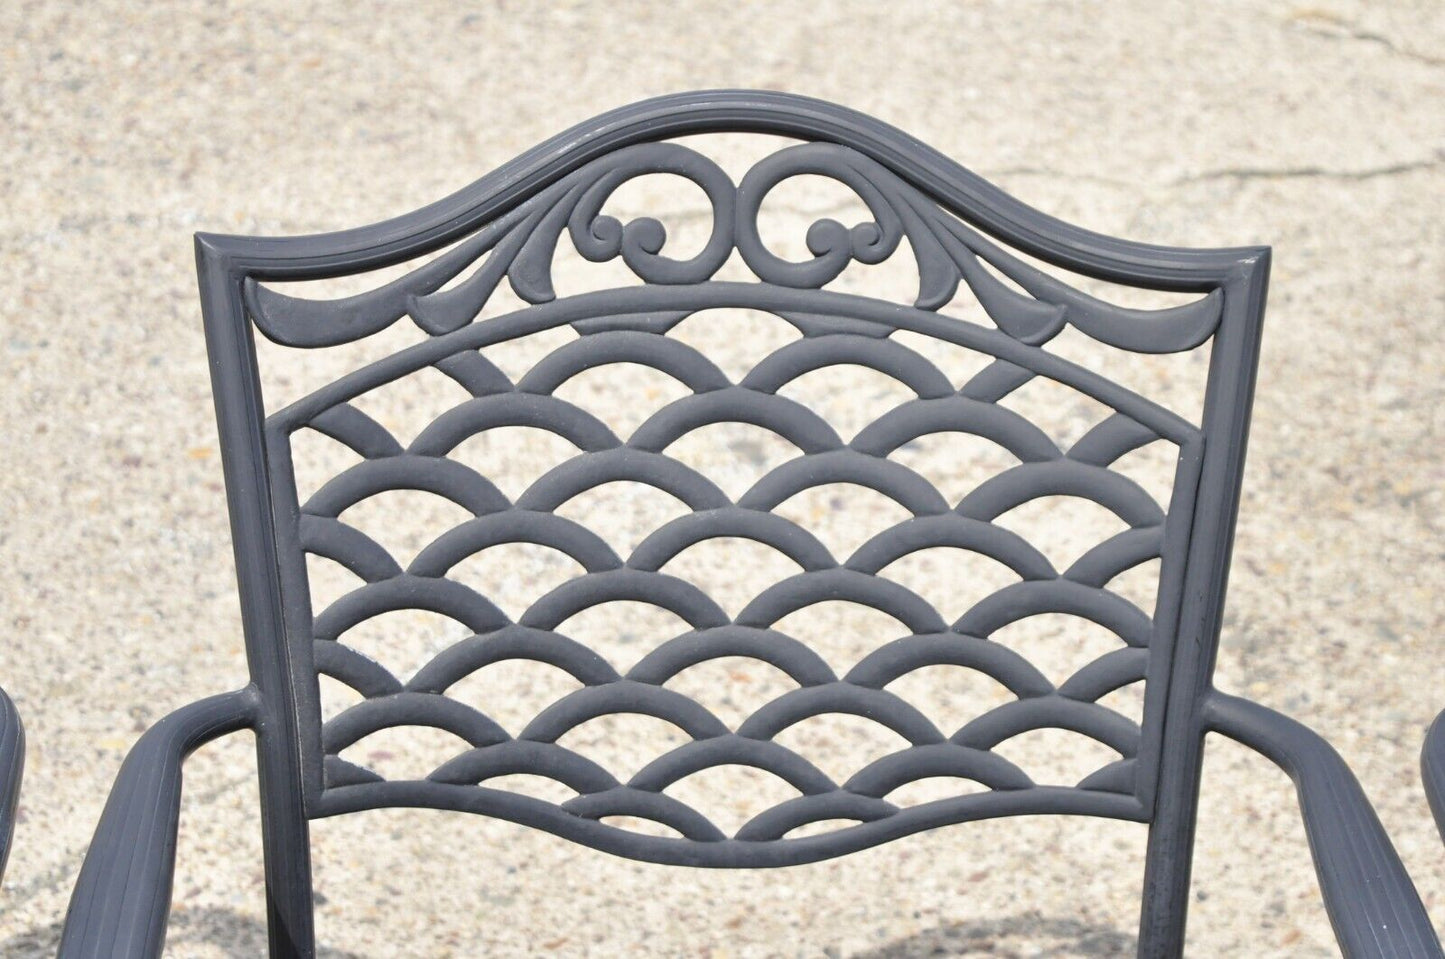 4 Tuscan Mediterranean Style Black Aluminum Metal Garden Patio Dining Chair